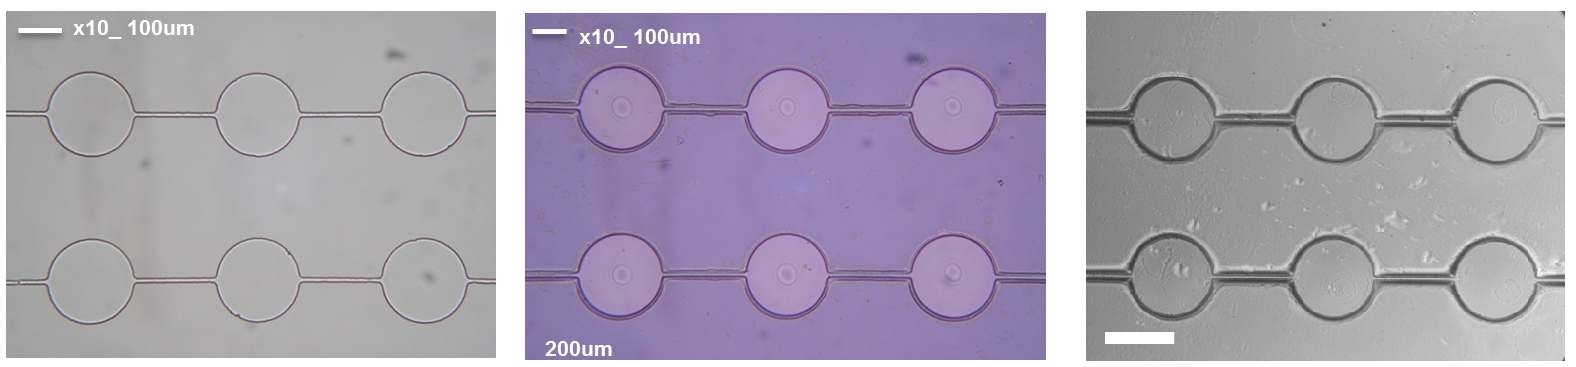 iCVD를 이용하여 제작한 microfluidic 구조. 좌측: Si mold. 중앙: SiN wafer에 옮겨진 채널구조. 우측: 바닥면을 제거한 free-standing 구조.